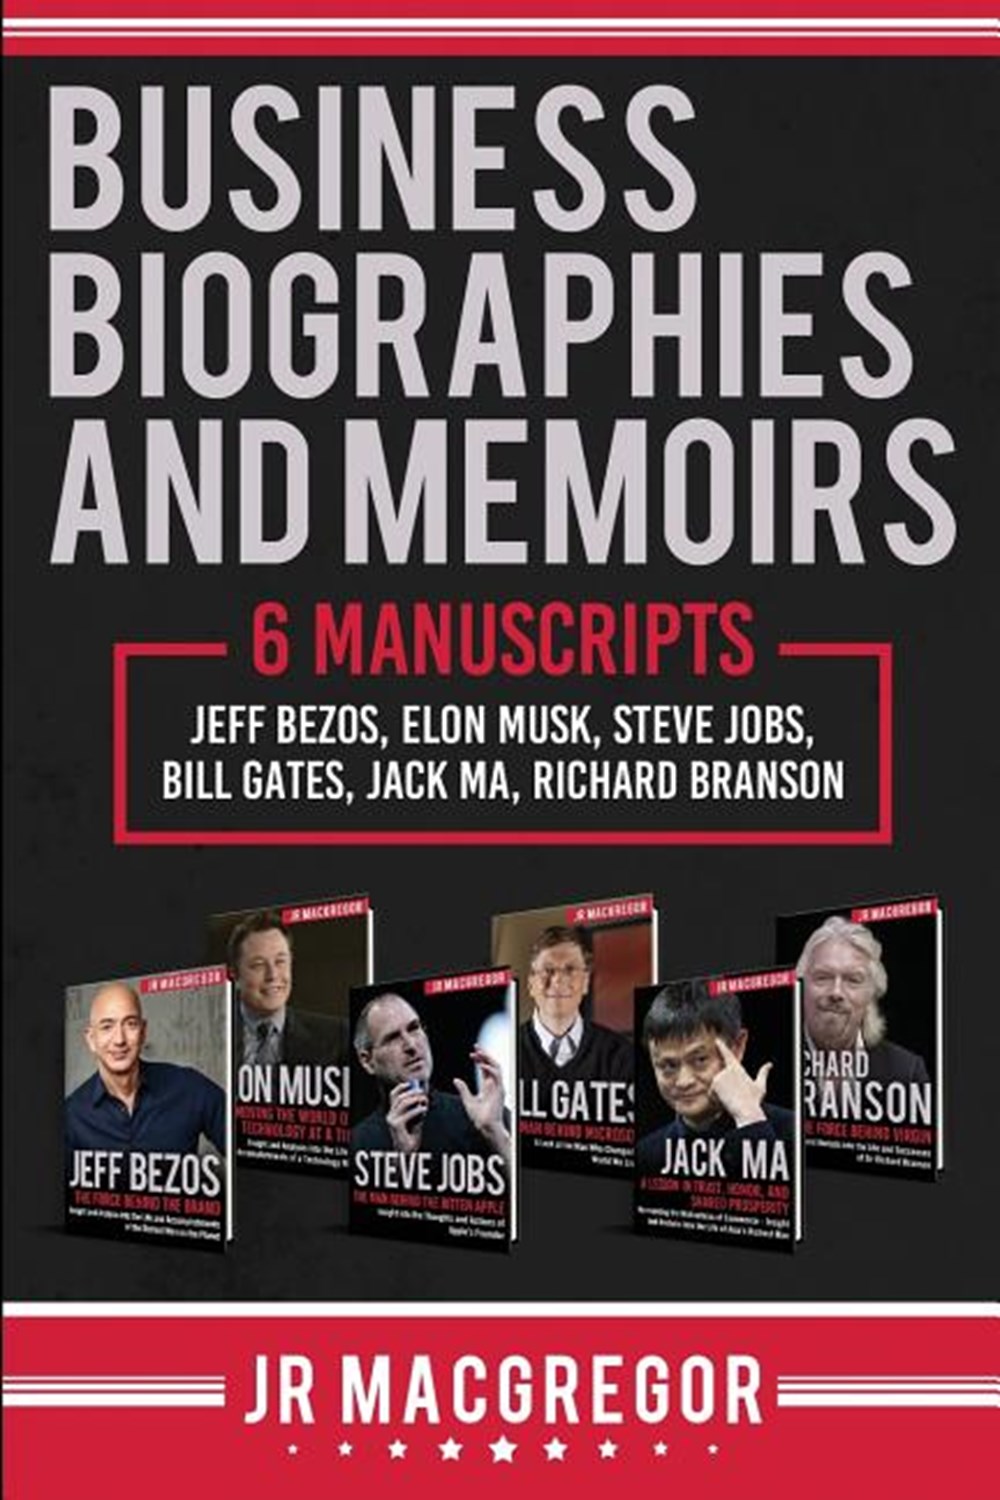 Business Biographies and Memoirs: 6 Manuscripts: Jeff Bezos, Elon Musk, Steve Jobs, Bill Gates, Jack